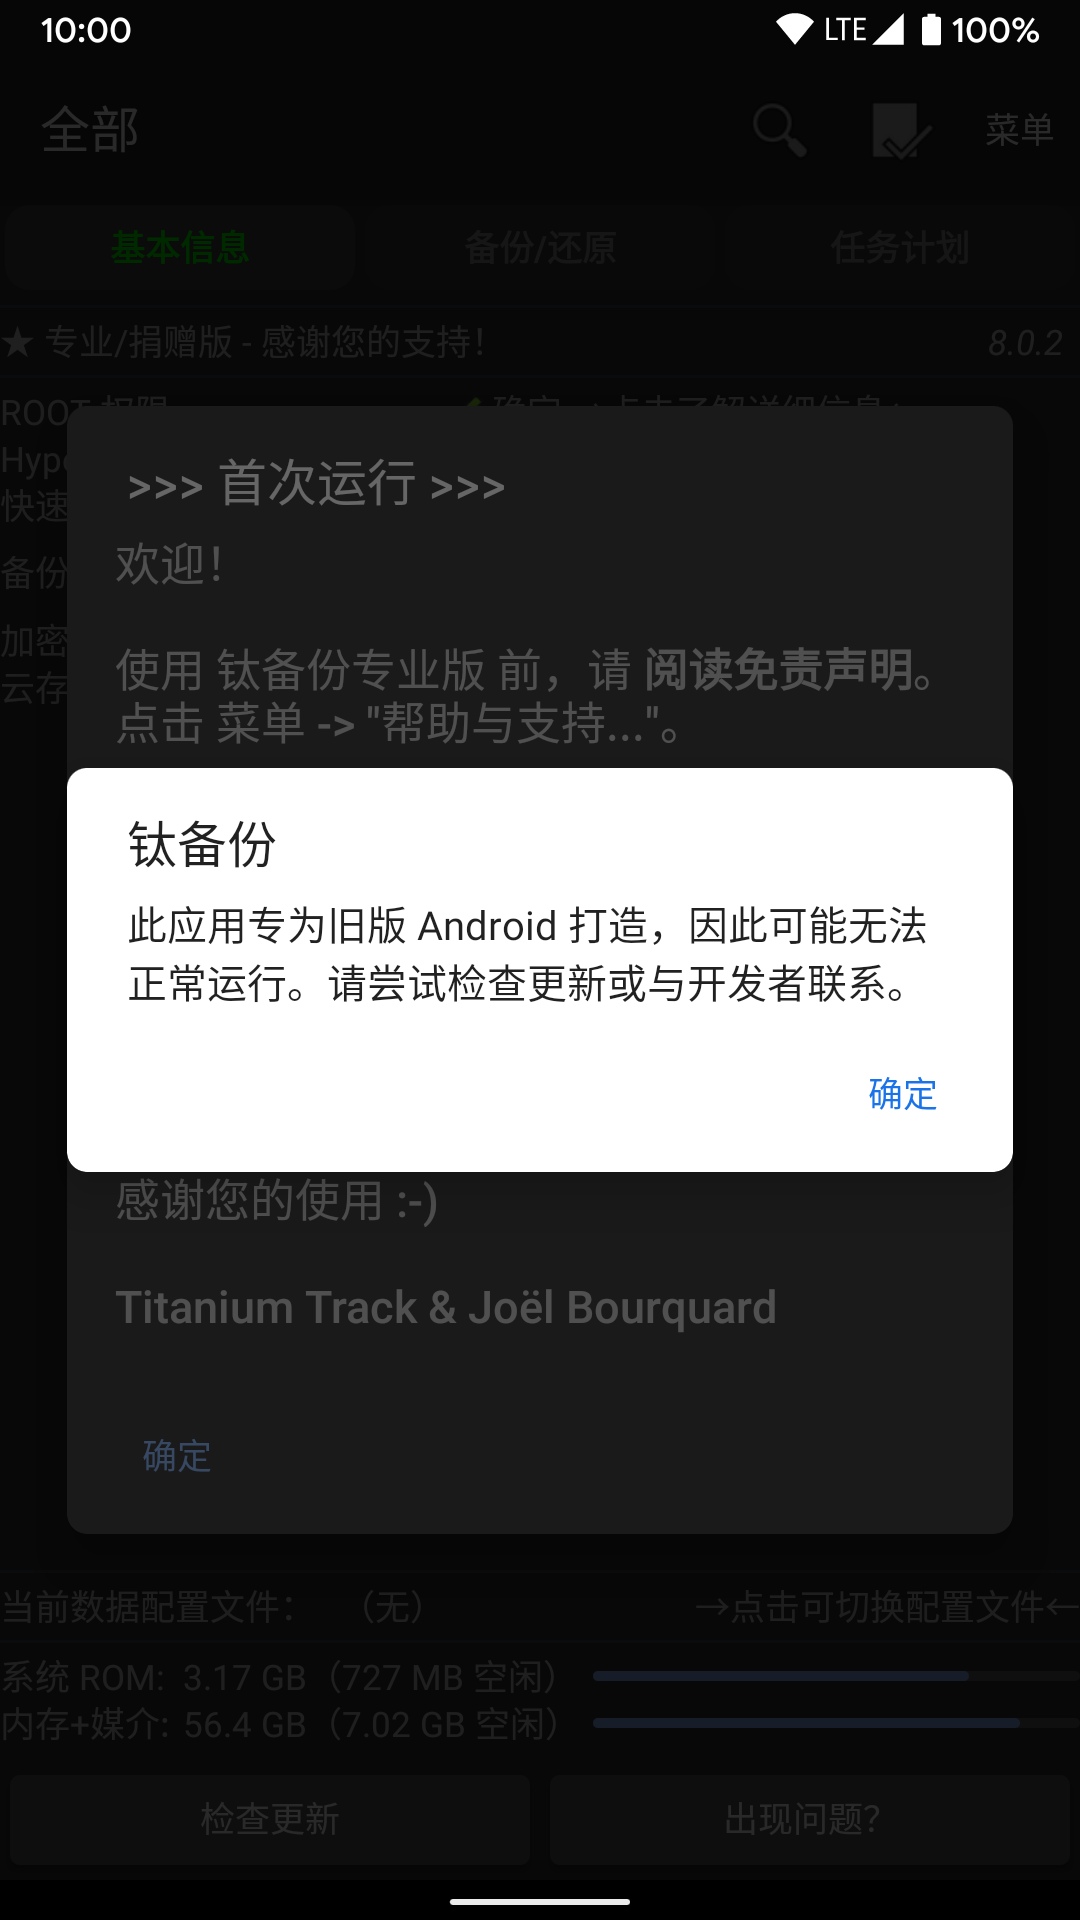 Android 10 上显示的未兼容提示